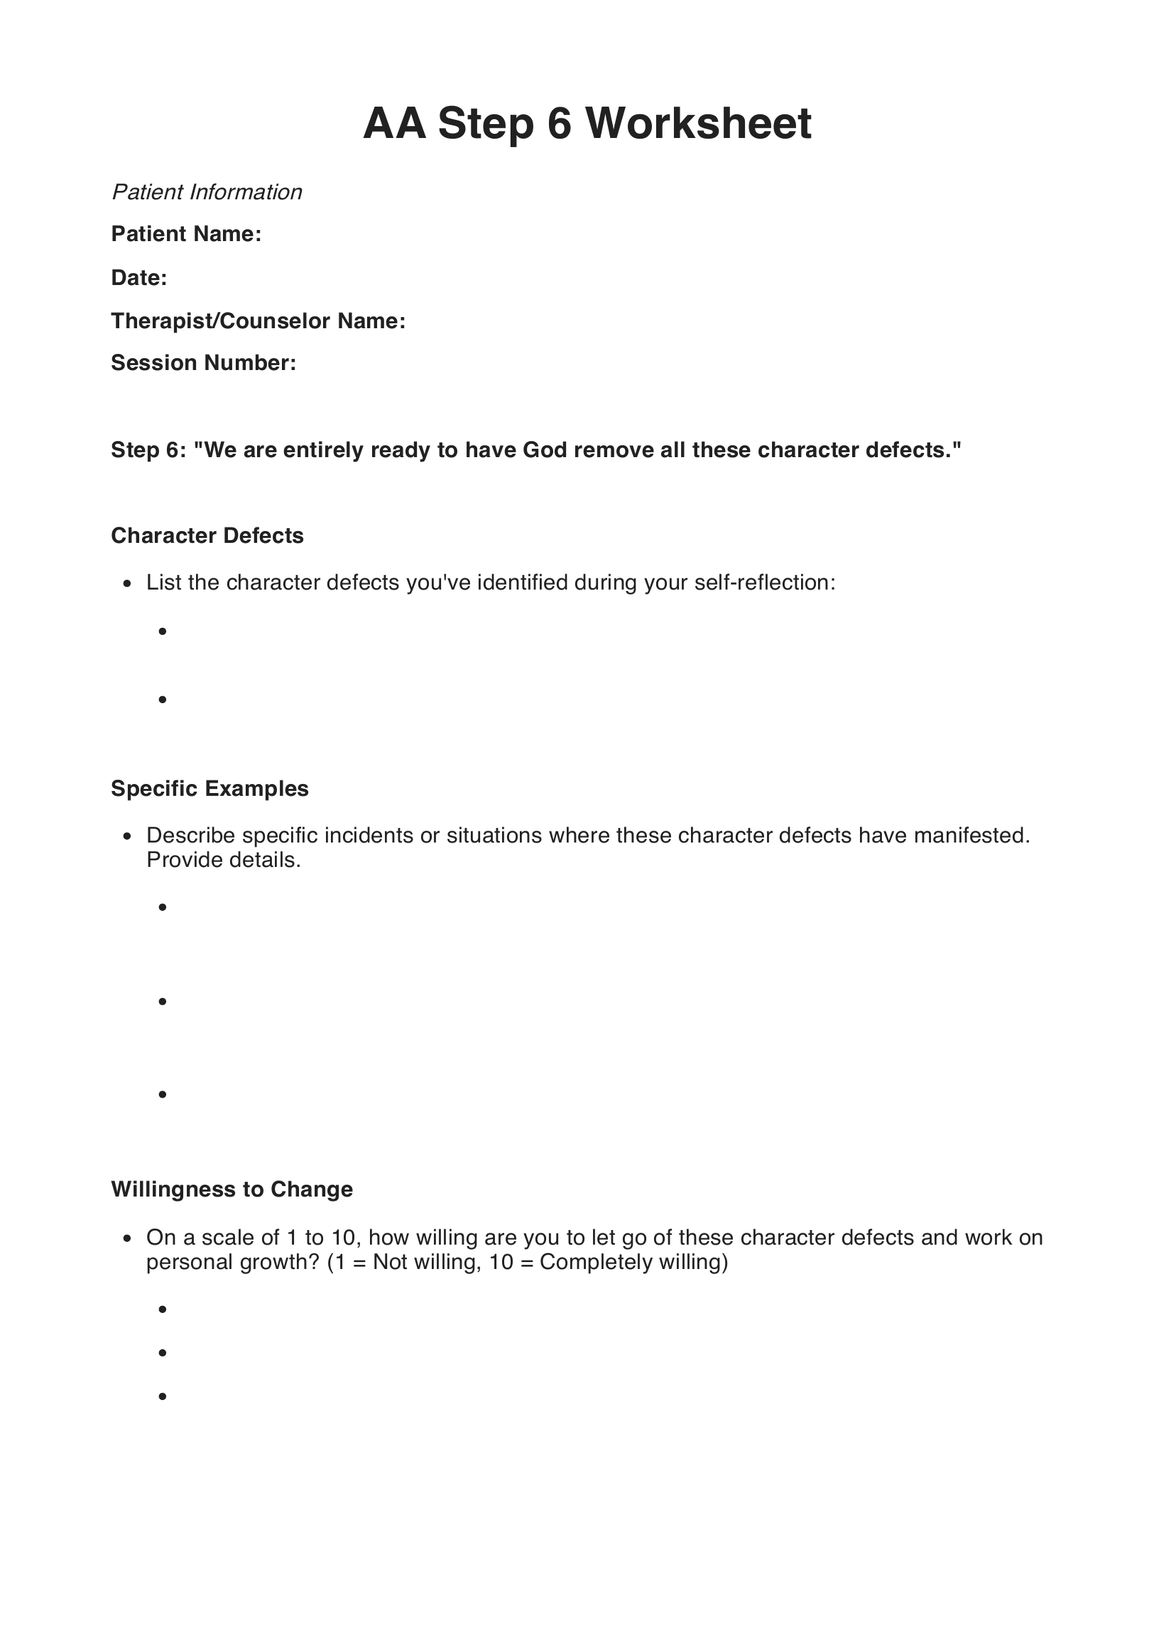 AA Step 6 Worksheets PDF Example